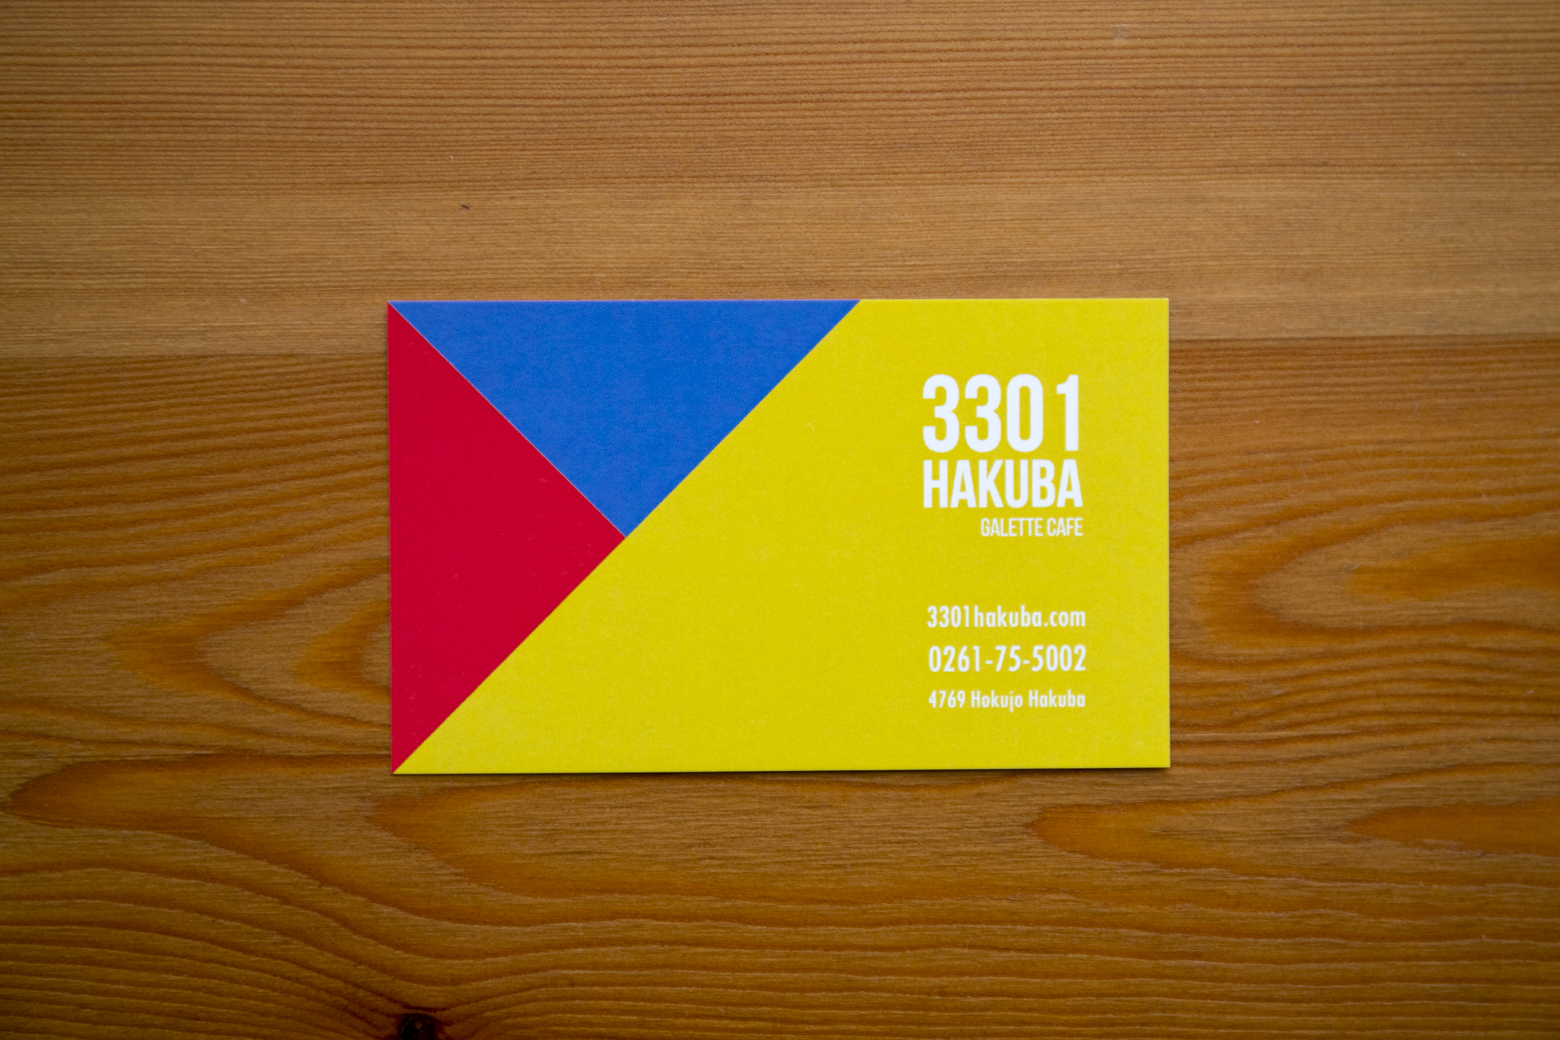 3301hakubaのショップカード